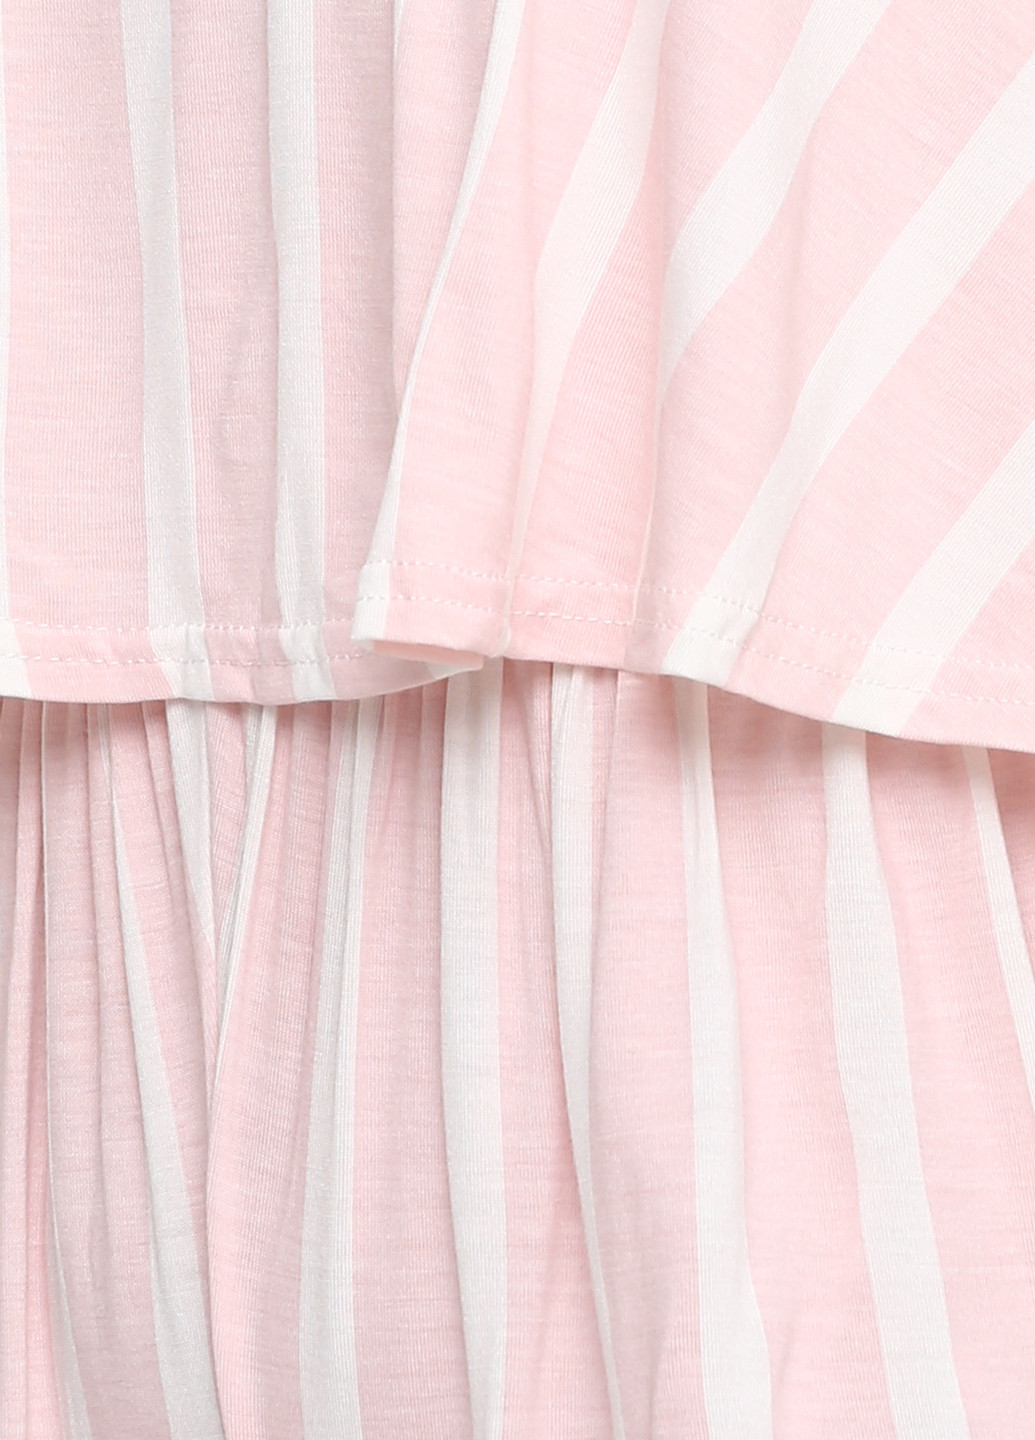 Комбинезон PrettyLittleThing комбинезон-шорты полоска светло-розовый кэжуал вискоза